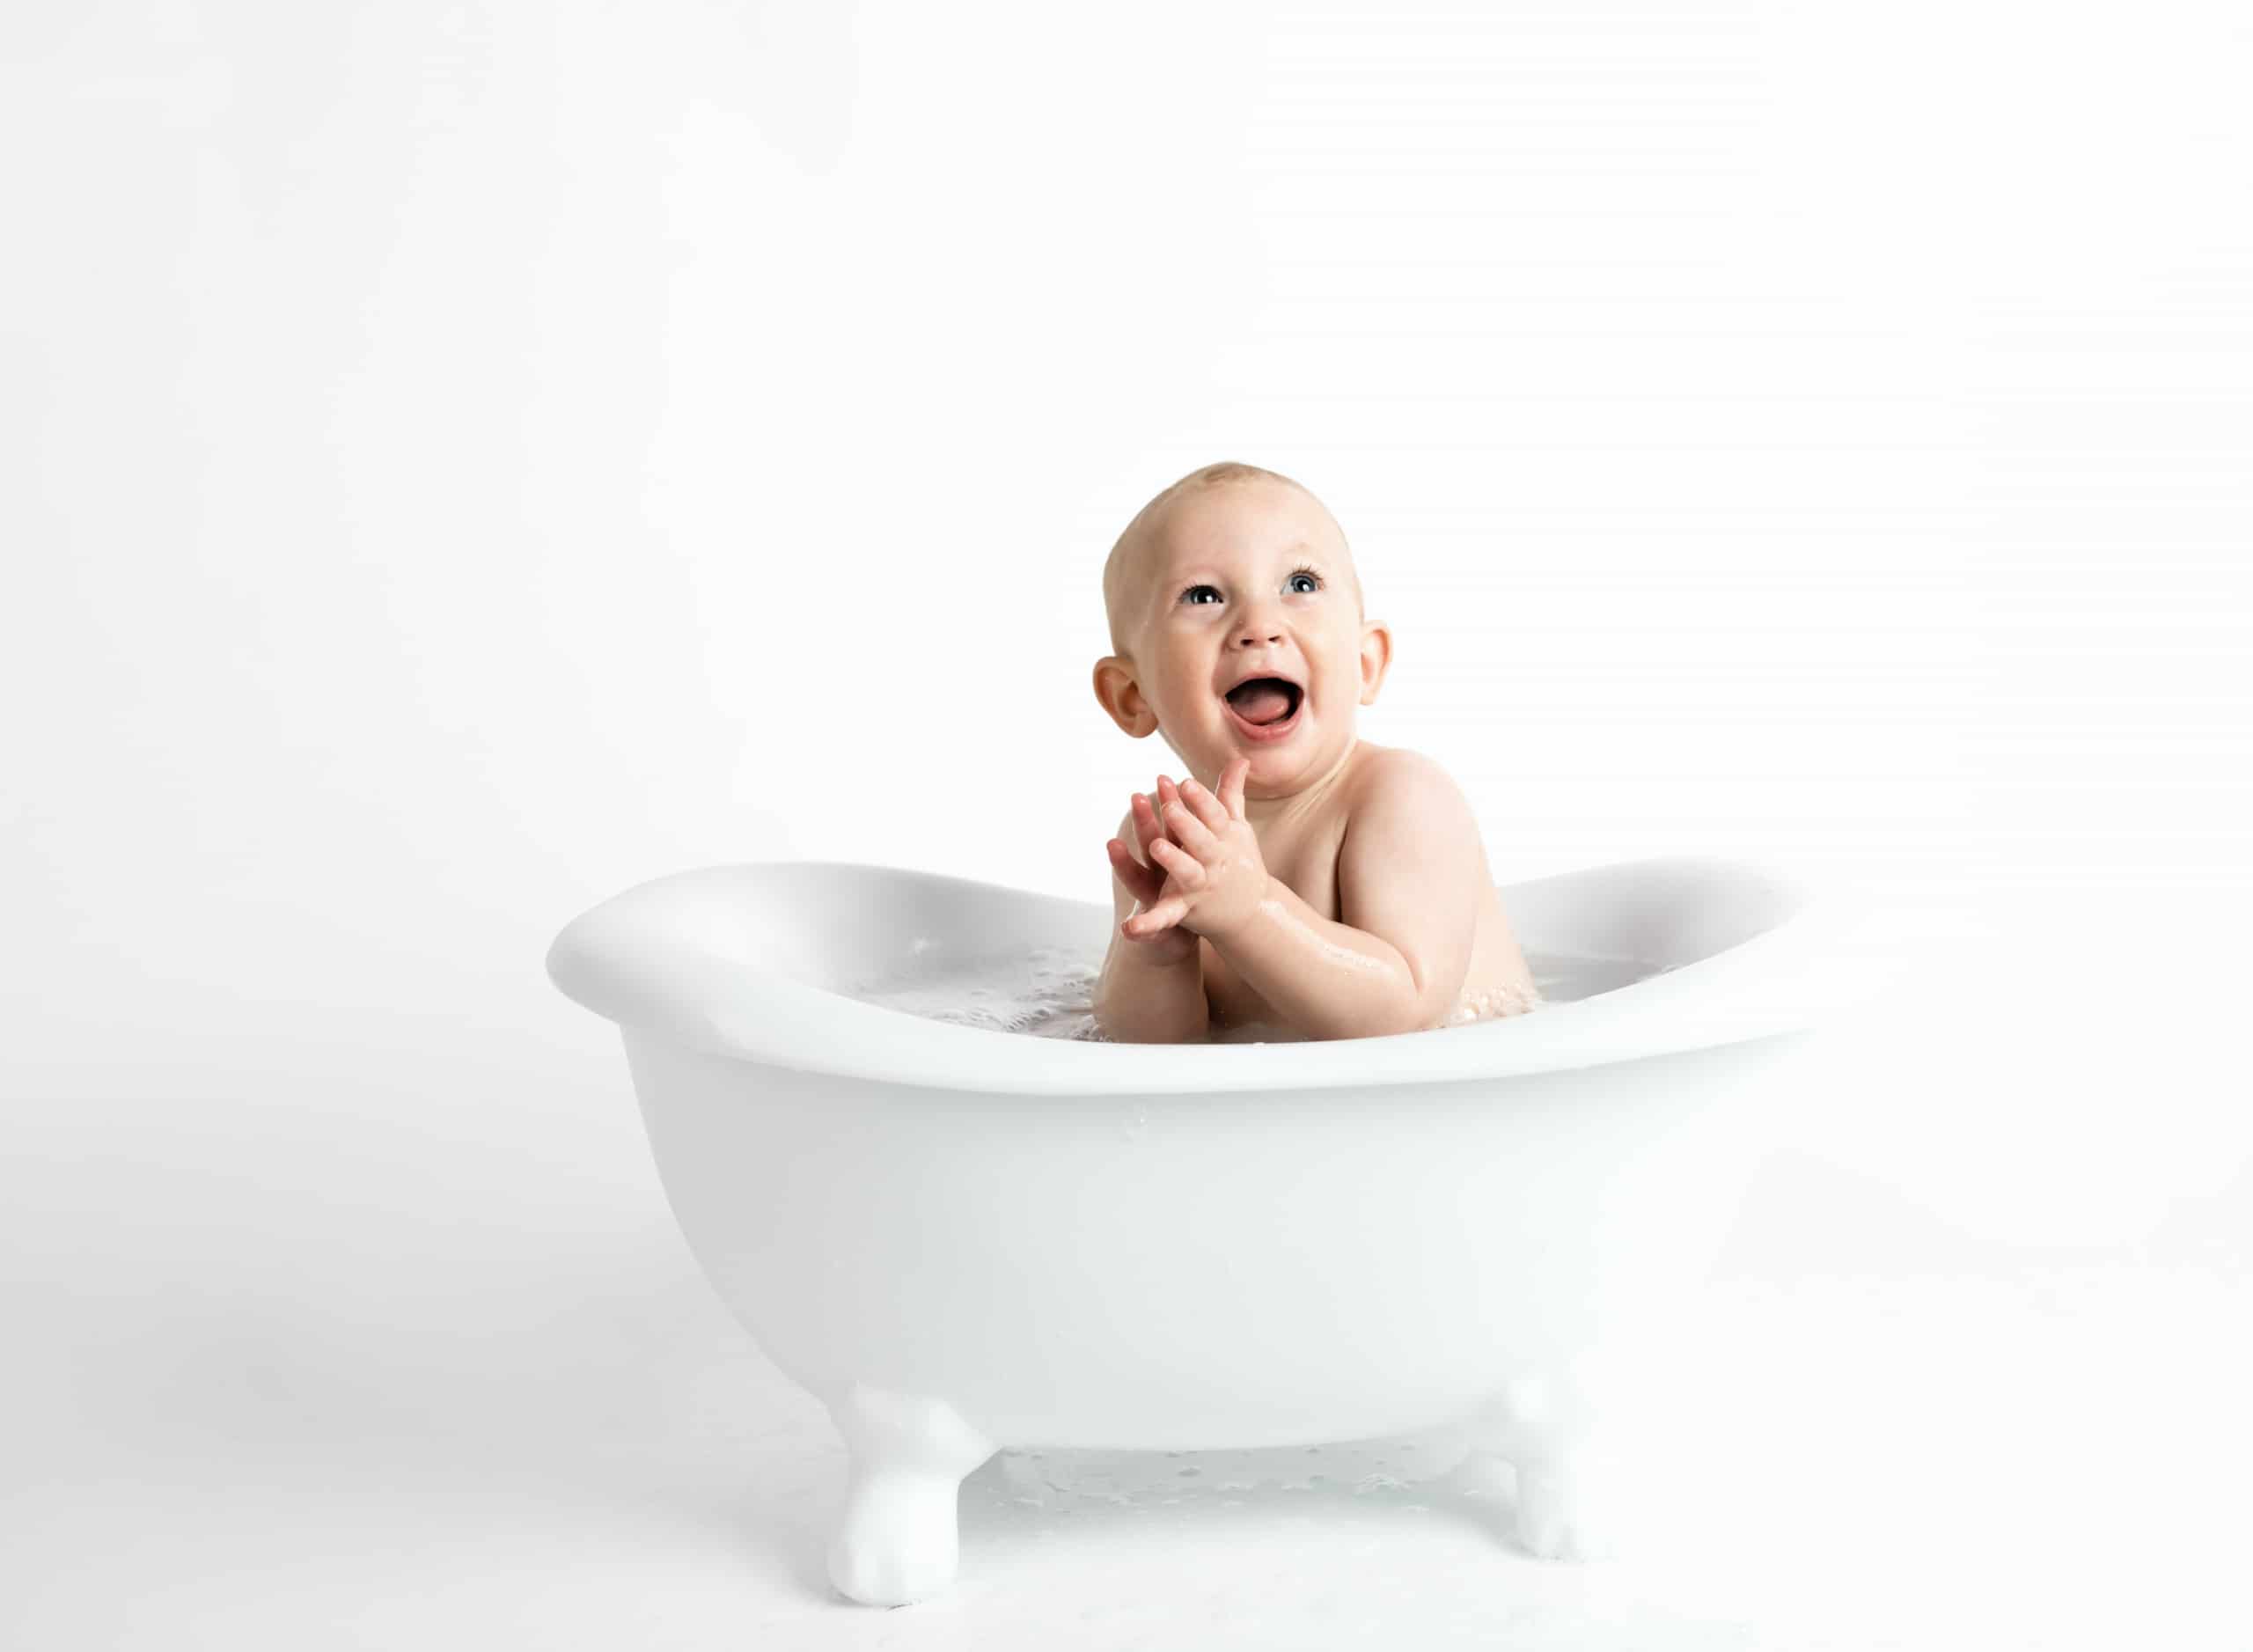 Baby Smiling in a Bathtub